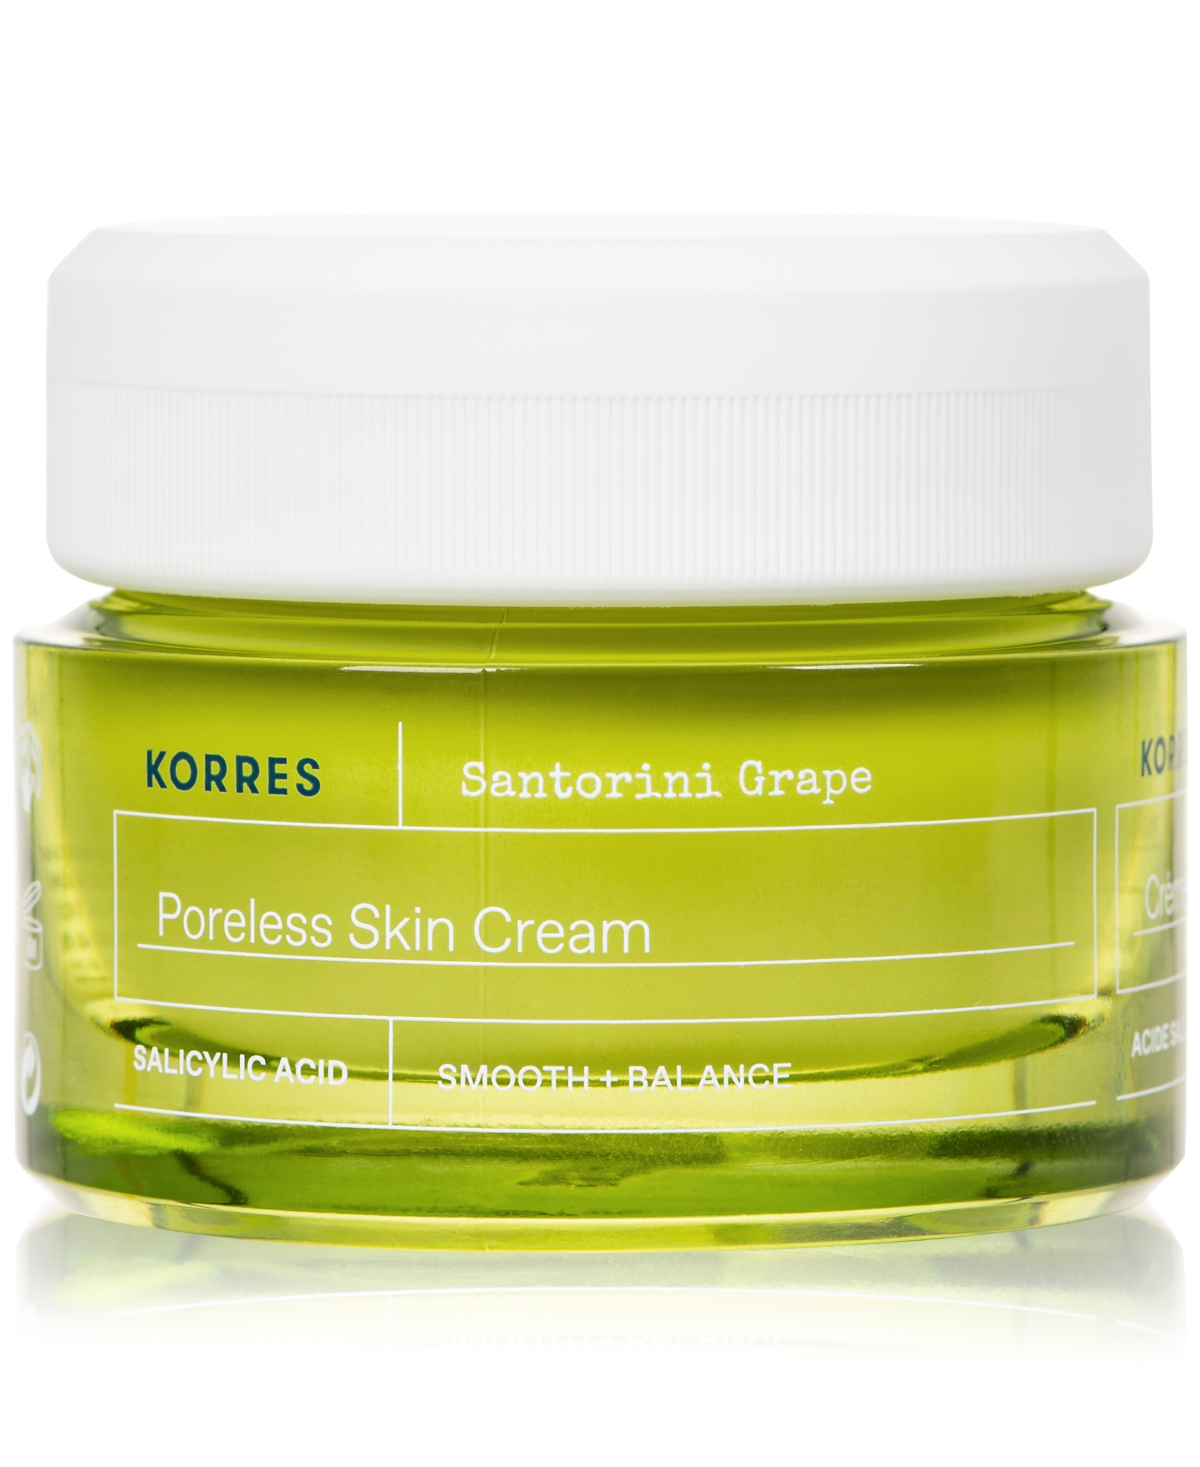 Santorini Grape Poreless Skin Cream, 1.35 oz.